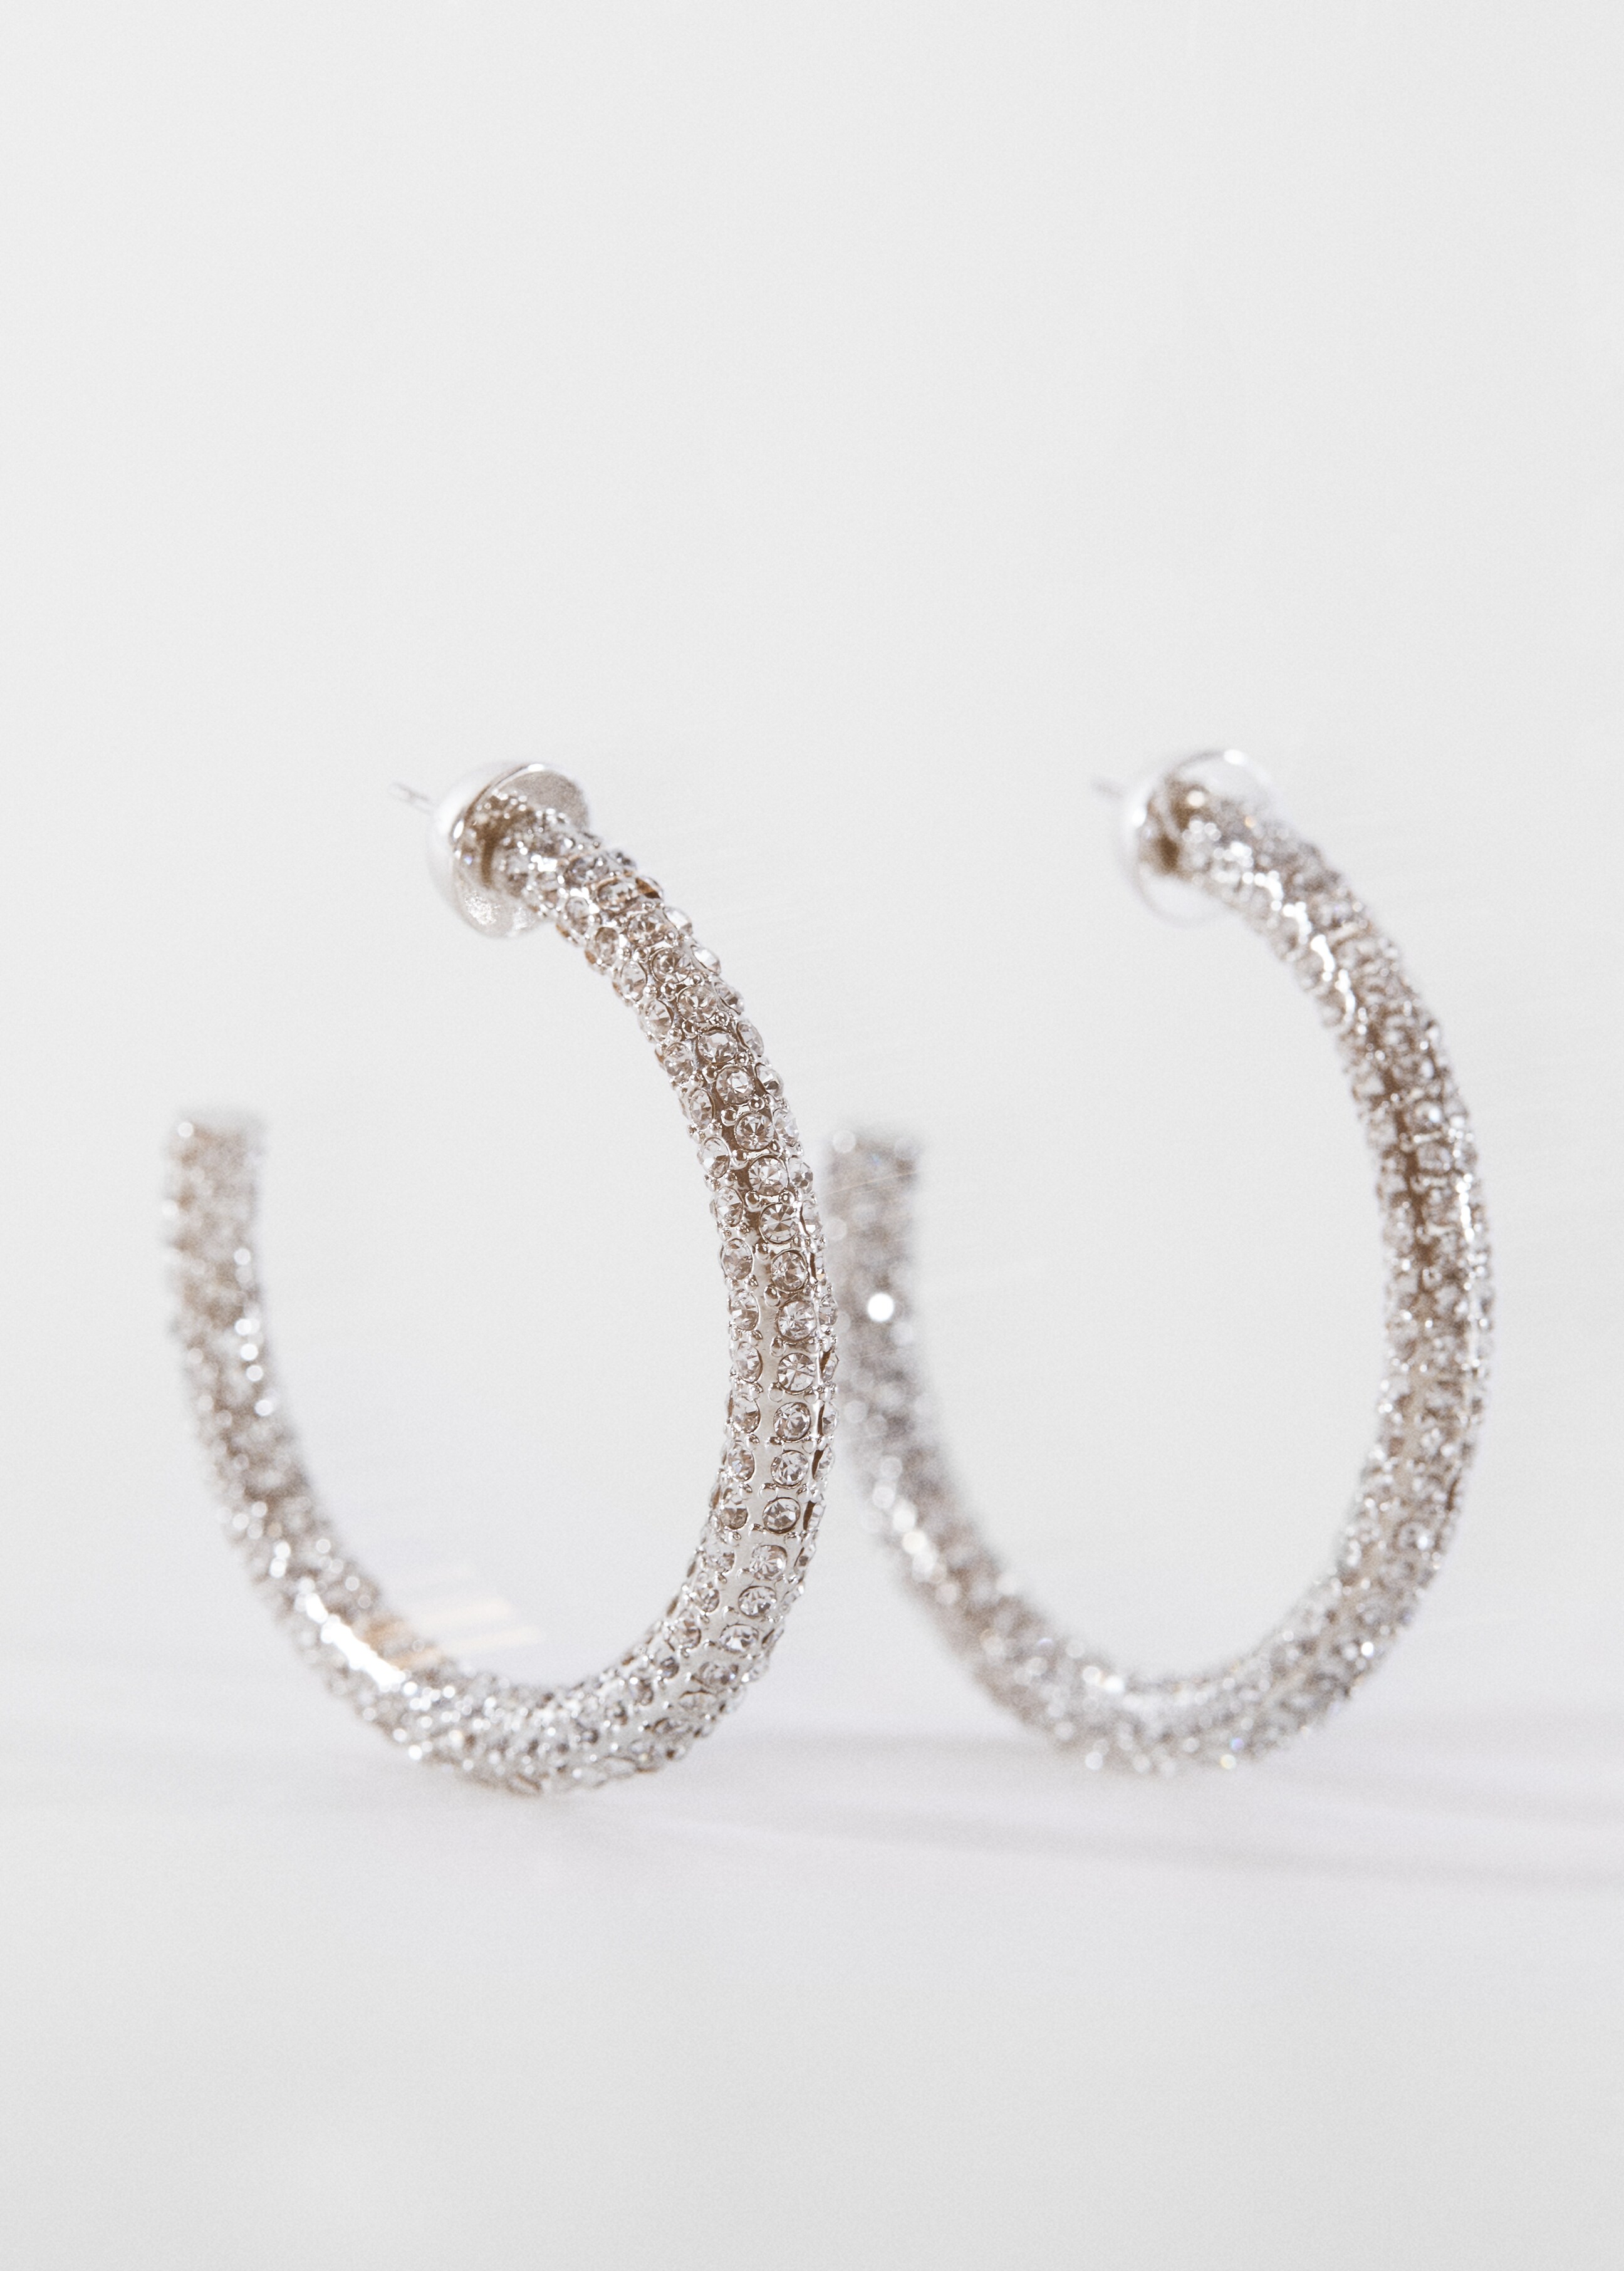 Faceted crystal hoop earrings - Details of the article 5